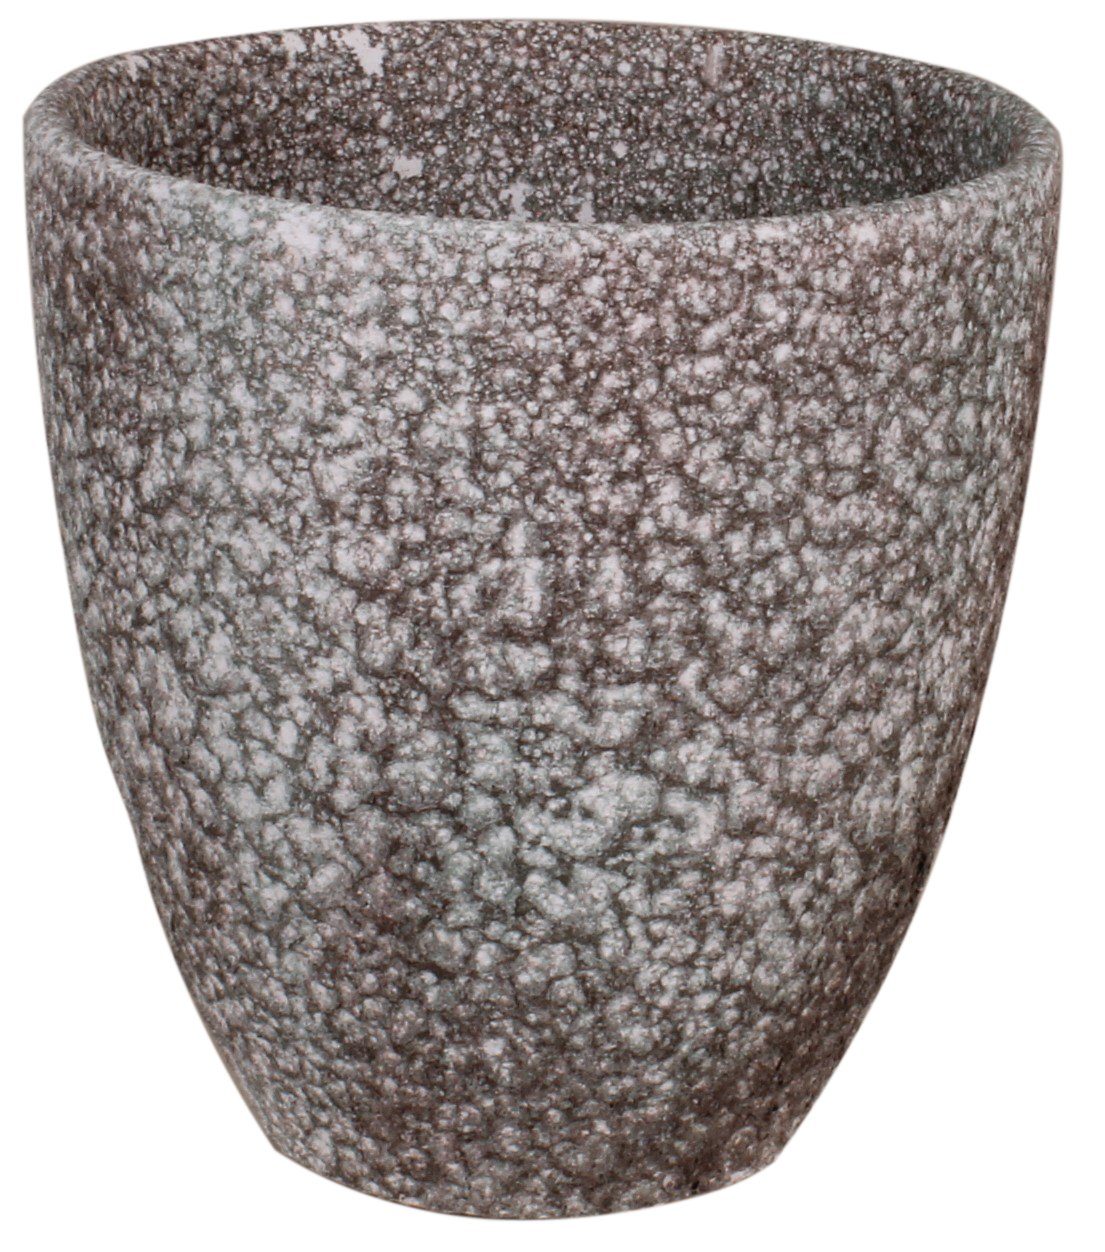 Multicolor Struktur tegawo Übertopf in Steinoptik Vulcano konisch Vase handgefertigt mit Portugal,